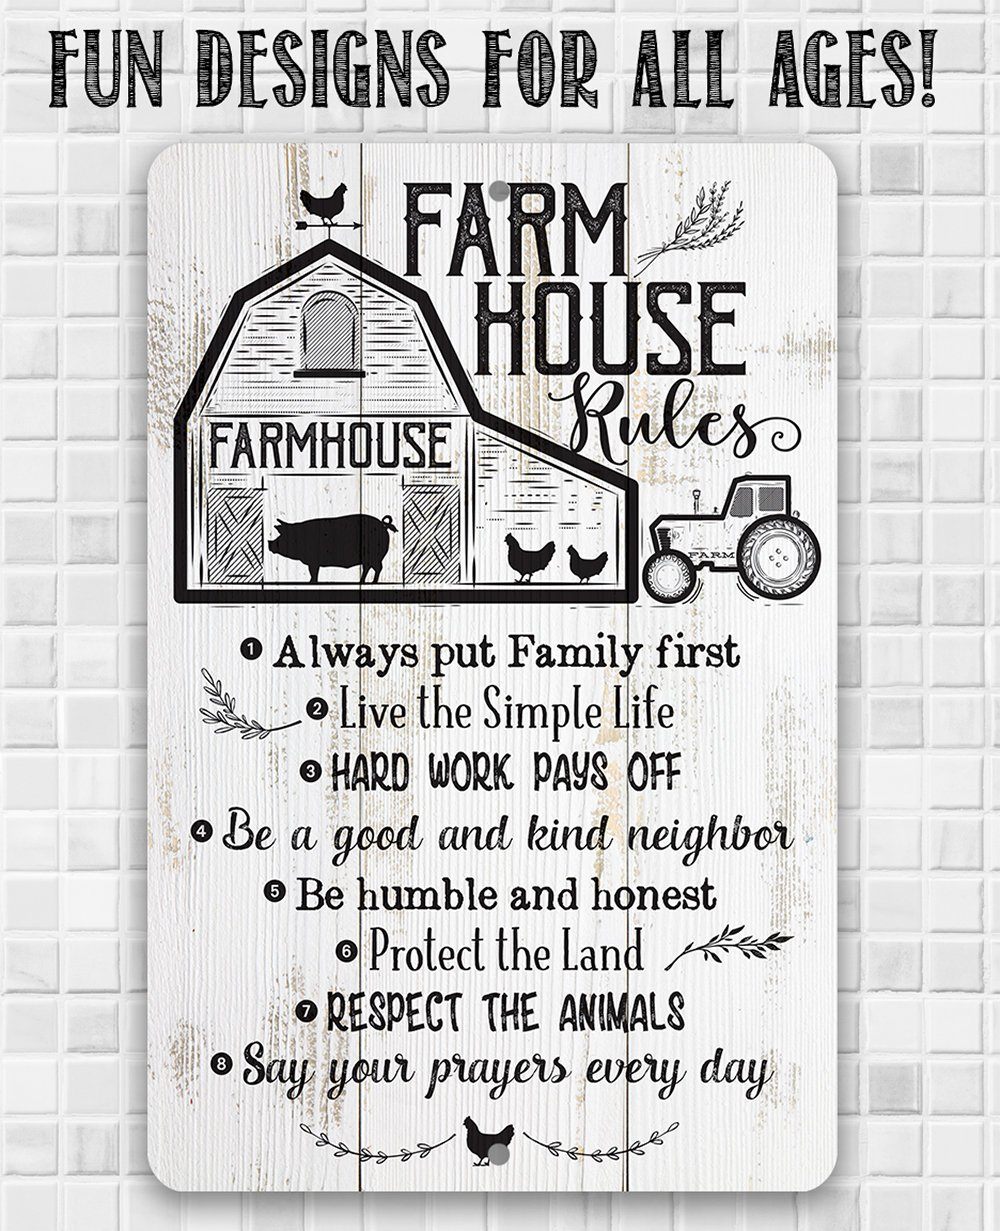 Farmhouse Rules - Metal Sign | Lone Star Art.